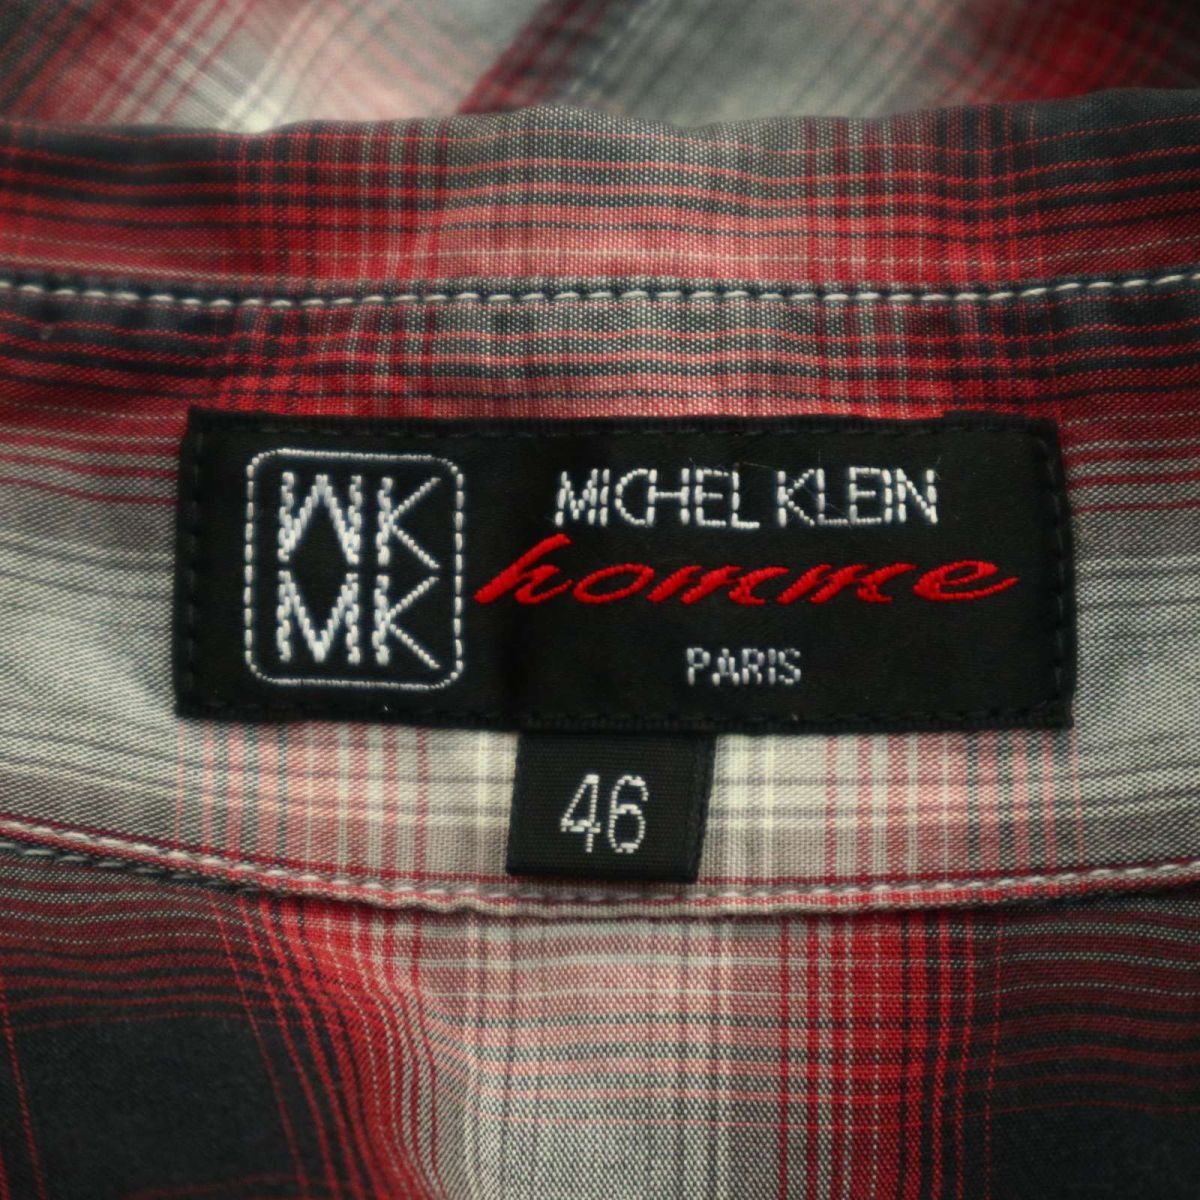 MK HOMME Michel Klein Homme through year * long sleeve Western check shirt Sz.46 men's A3T15432_C#C